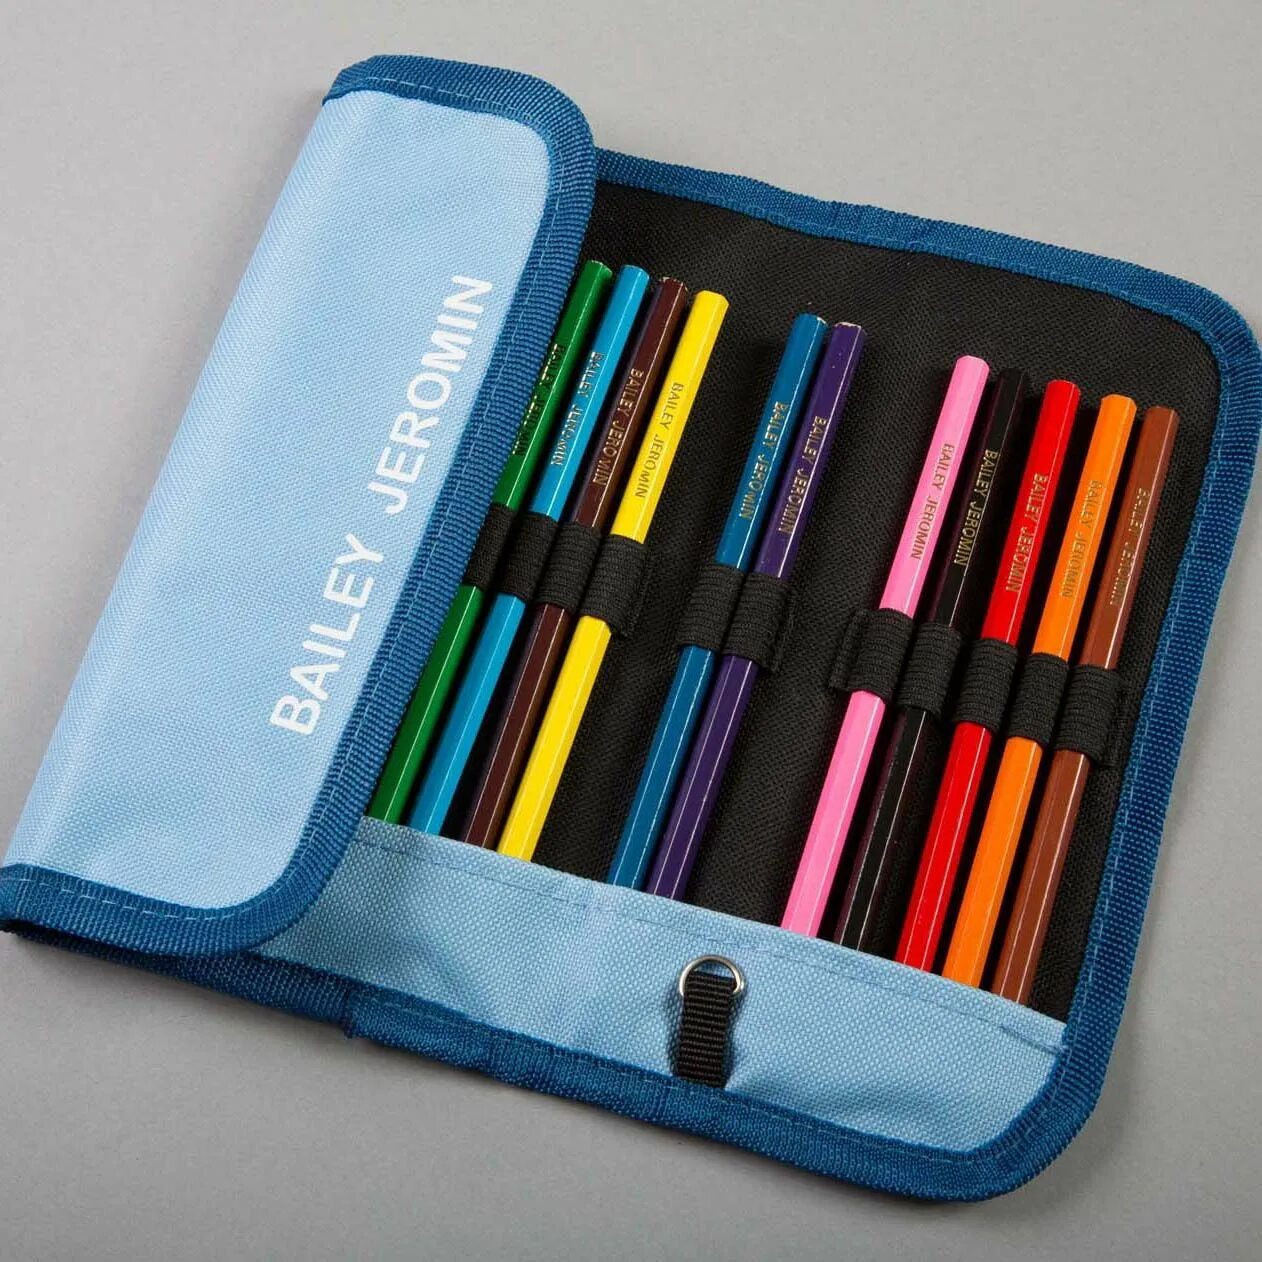 Pencil 2 case. Корпусный пенал Pencil Case. Планшет и Pencil Case. Velour Pencil Case. An Pencil Case или a Pencil Case.